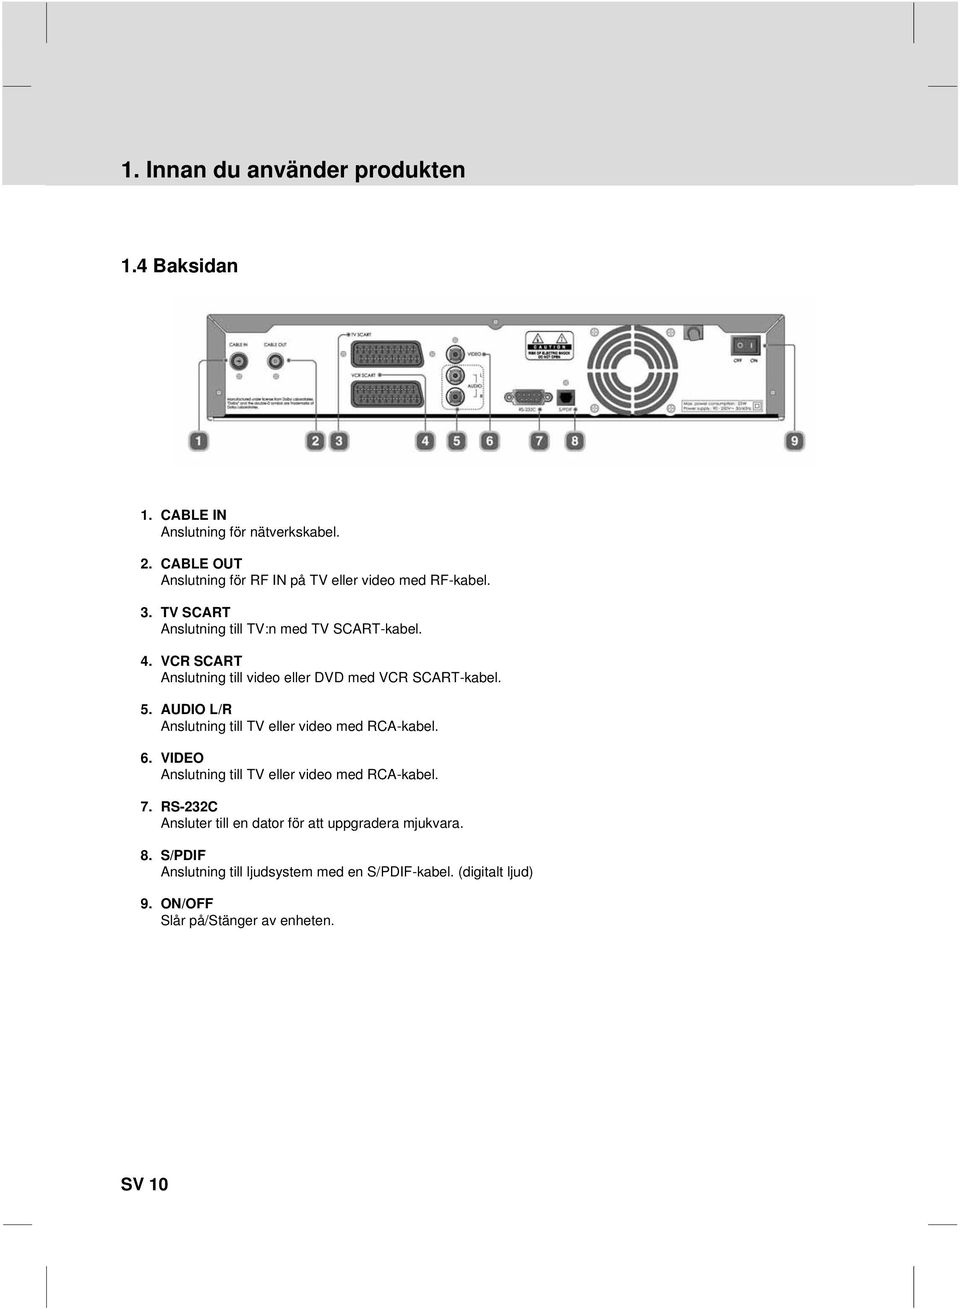 VCR SCART Anslutning till video eller DVD med VCR SCART-kabel. 5. AUDIO L/R Anslutning till TV eller video med RCA-kabel. 6.